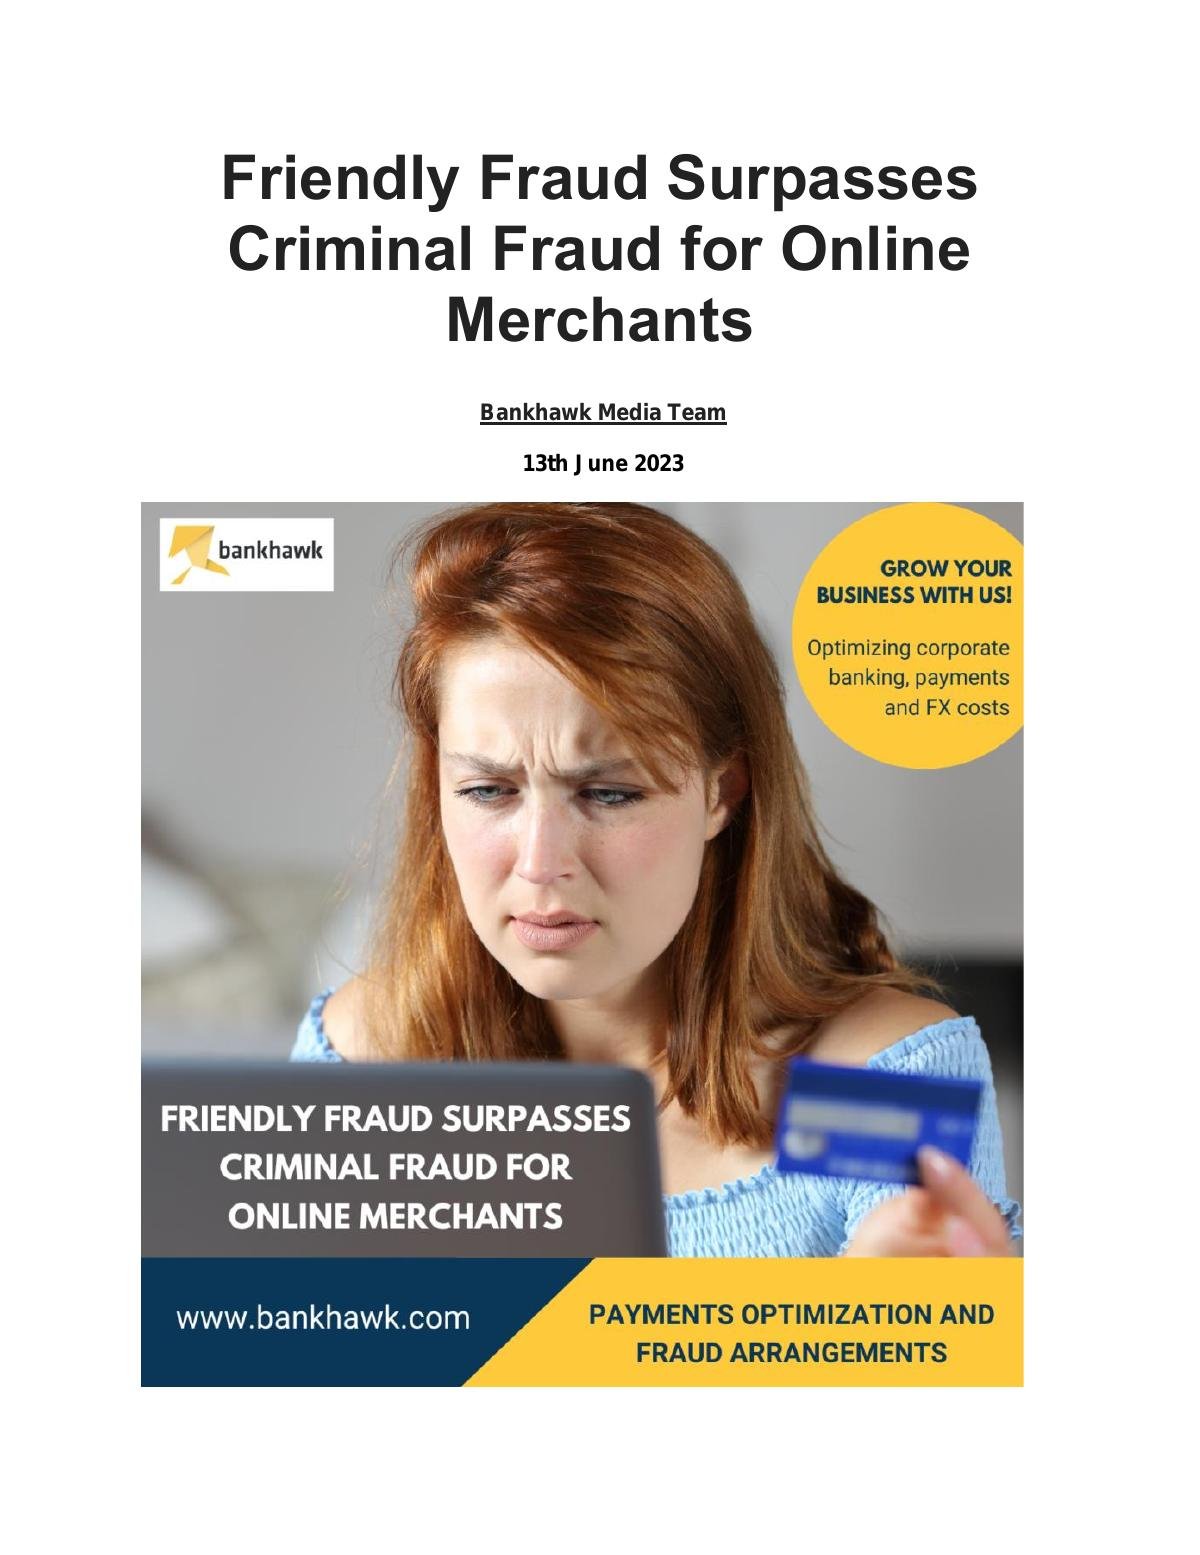 Friendly Fraud Surpasses Criminal Fraud for Online Merchants